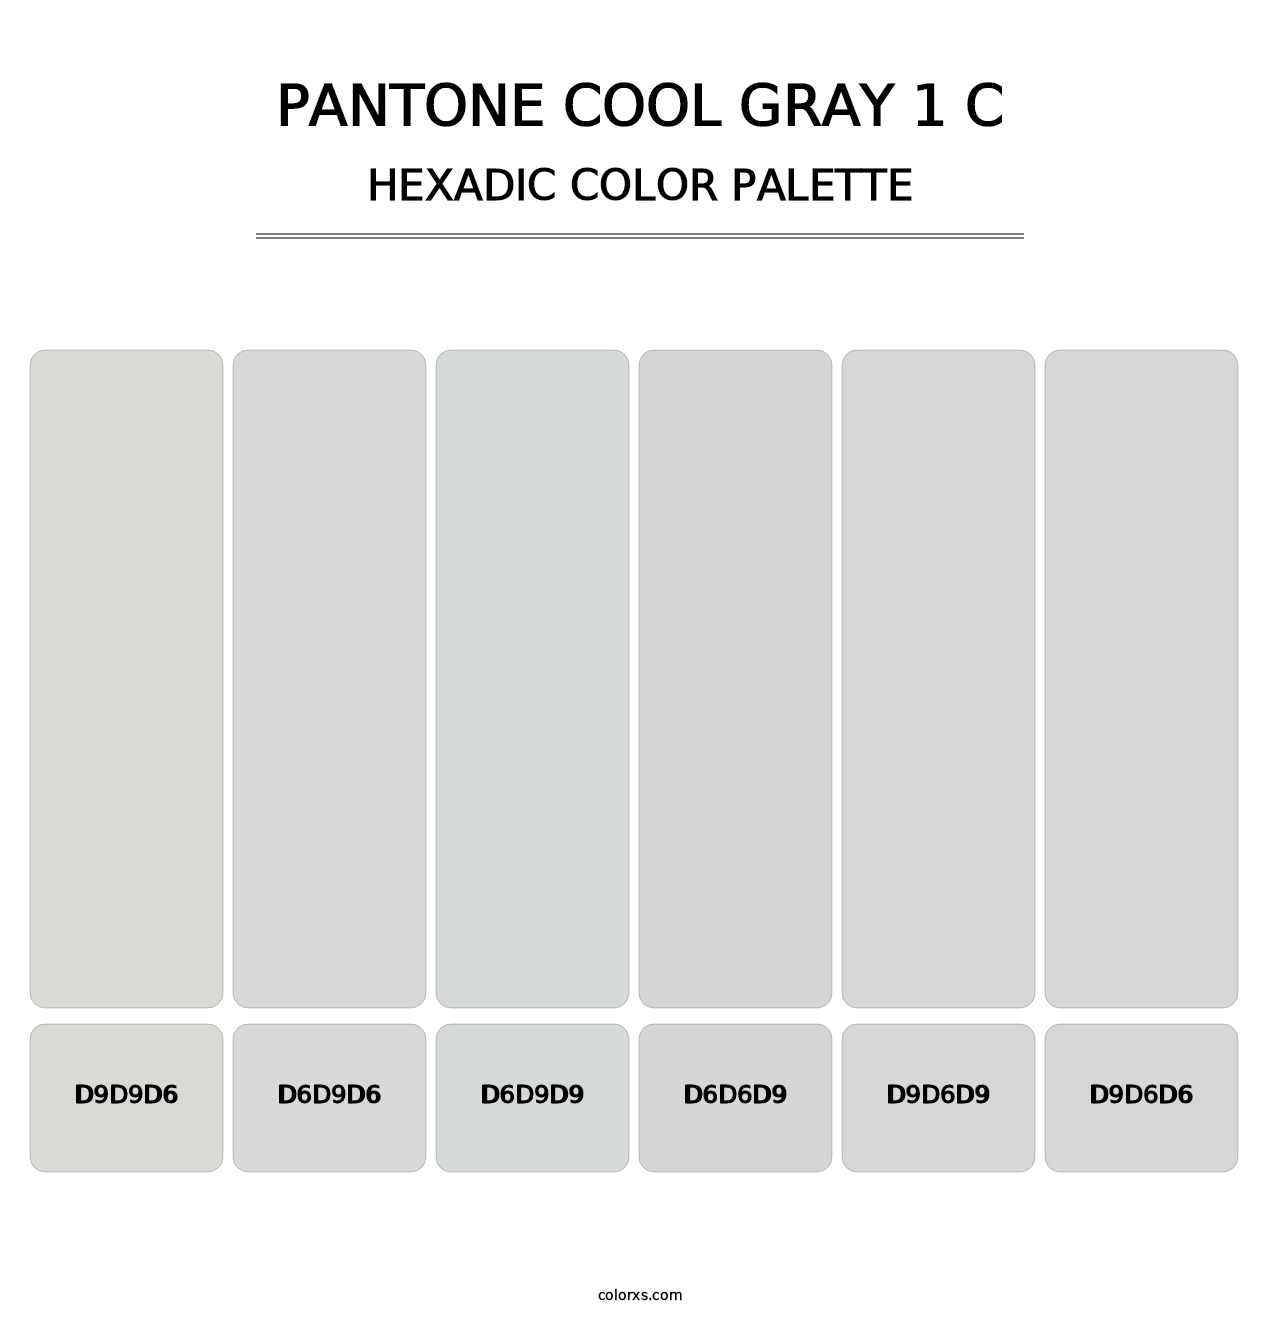 PANTONE Cool Gray 1 C - Hexadic Color Palette